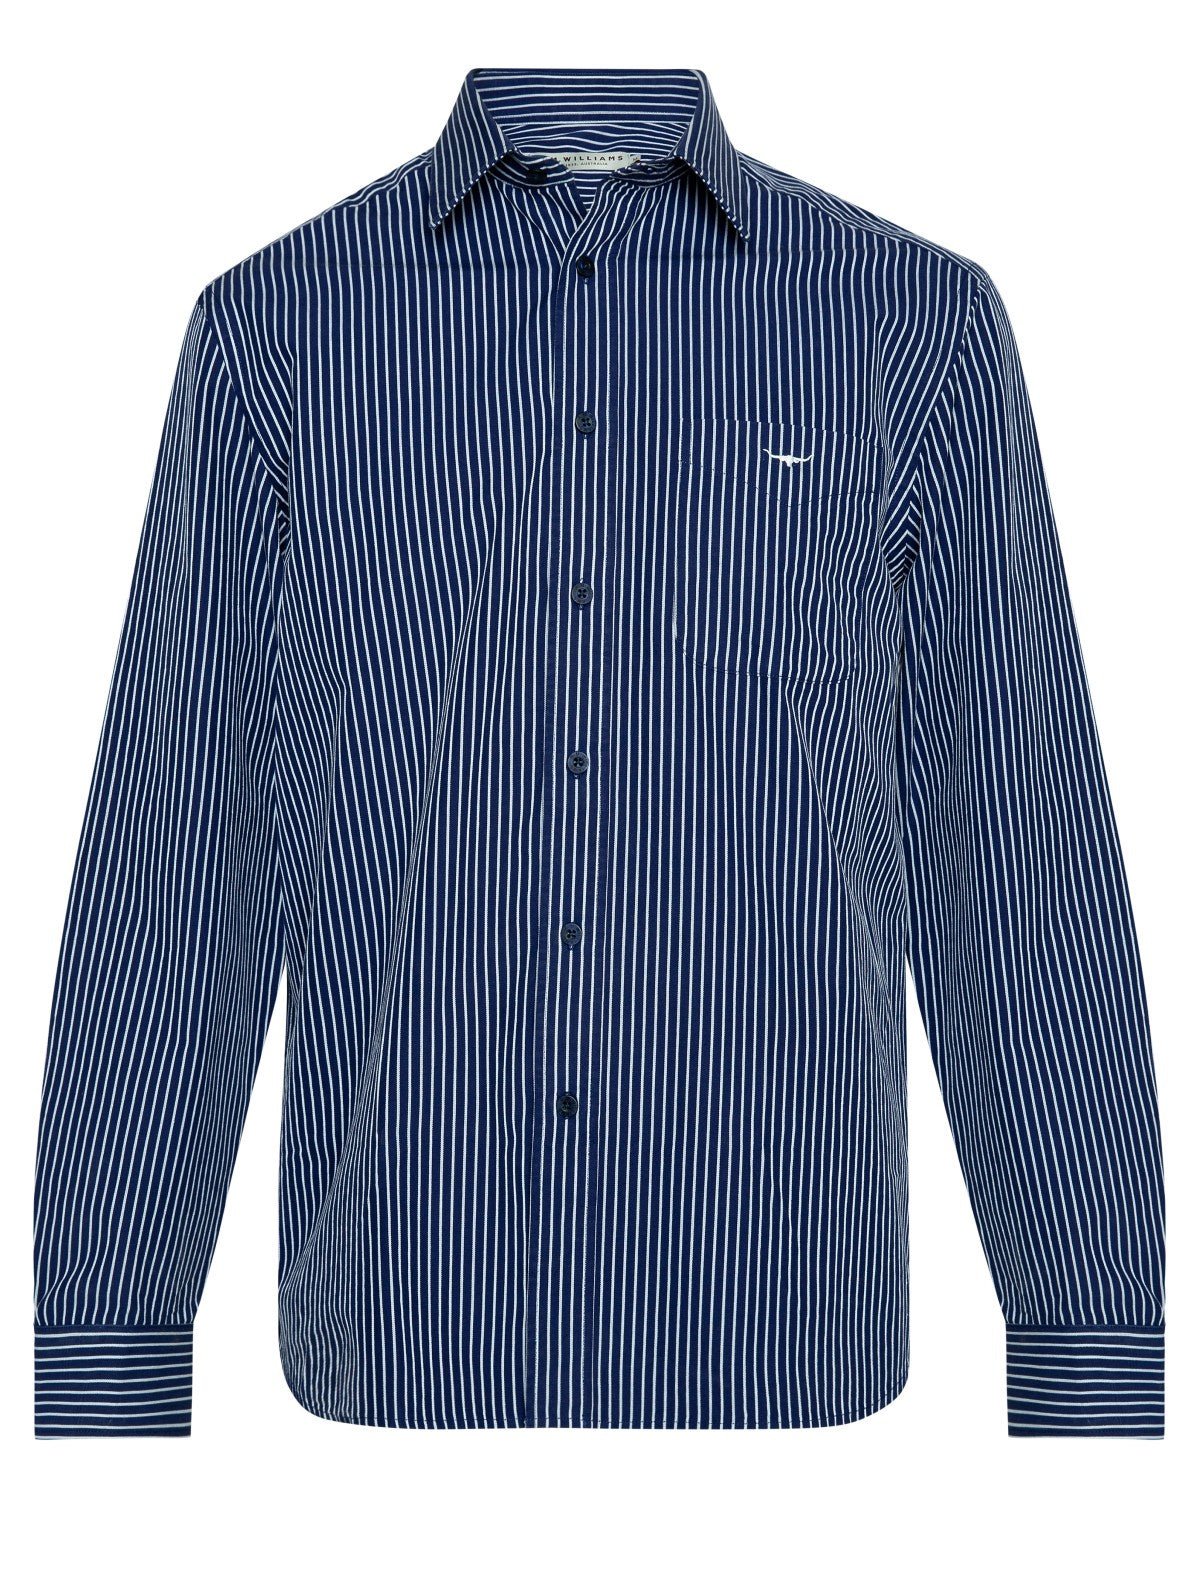 RMW W21 Twill Combo Collins Shirt - Thomson's Suits Ltd - NavyWhite - S - 47716